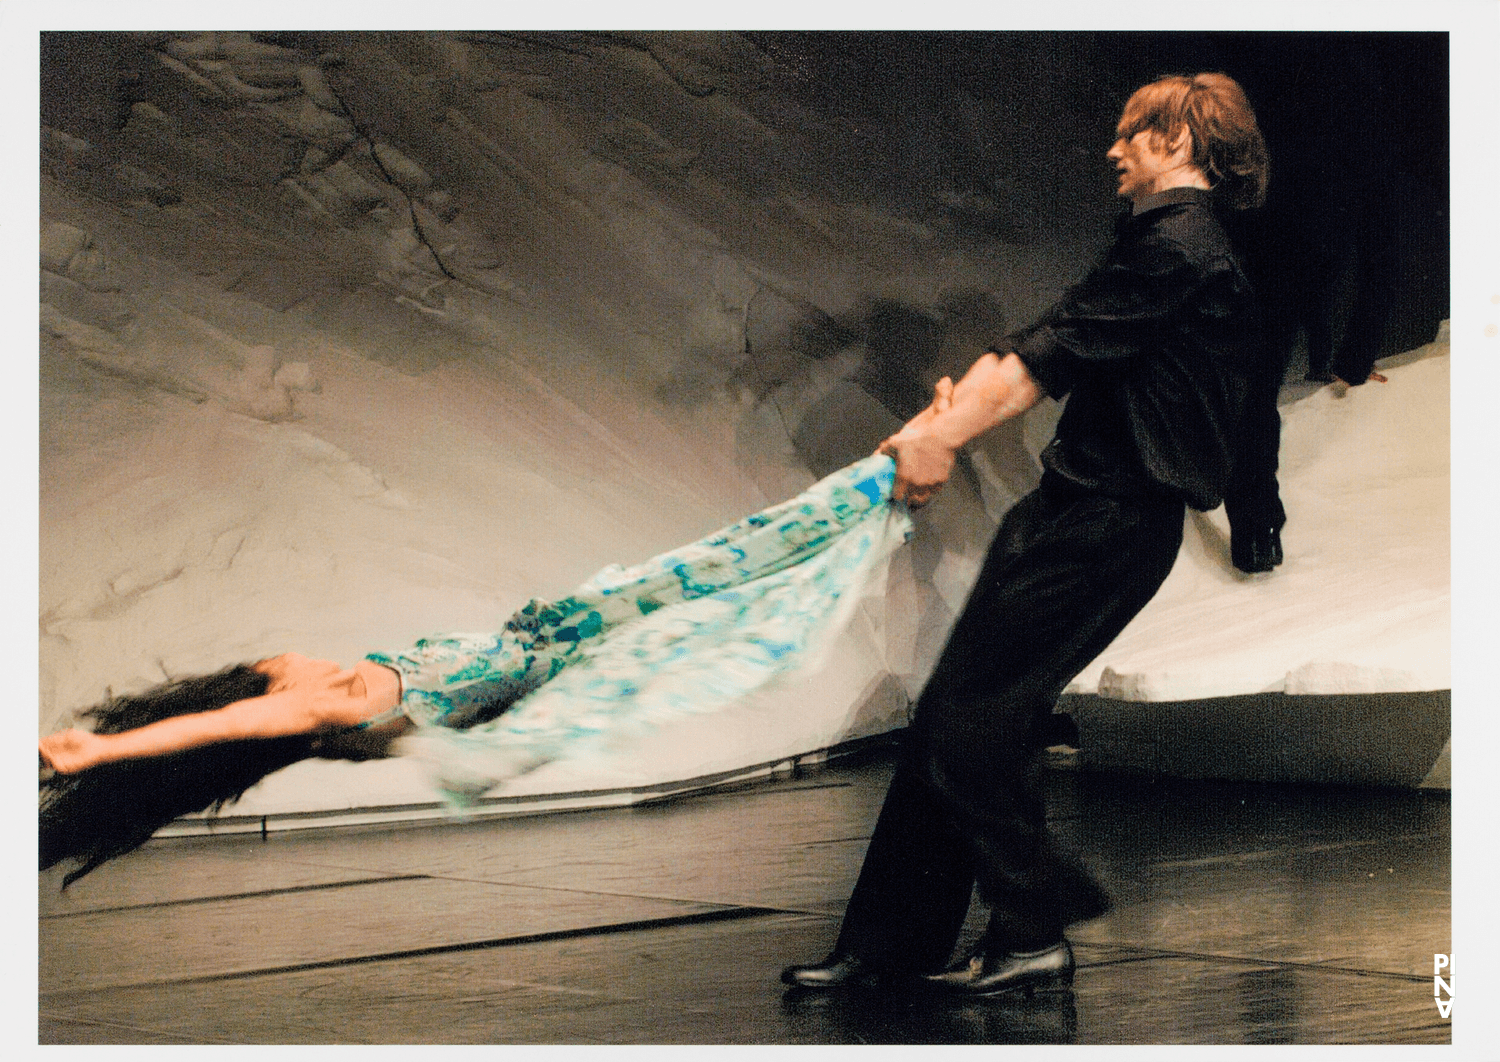 Michael Strecker and Azusa Seyama in “Rough Cut” by Pina Bausch, April 14, 2005